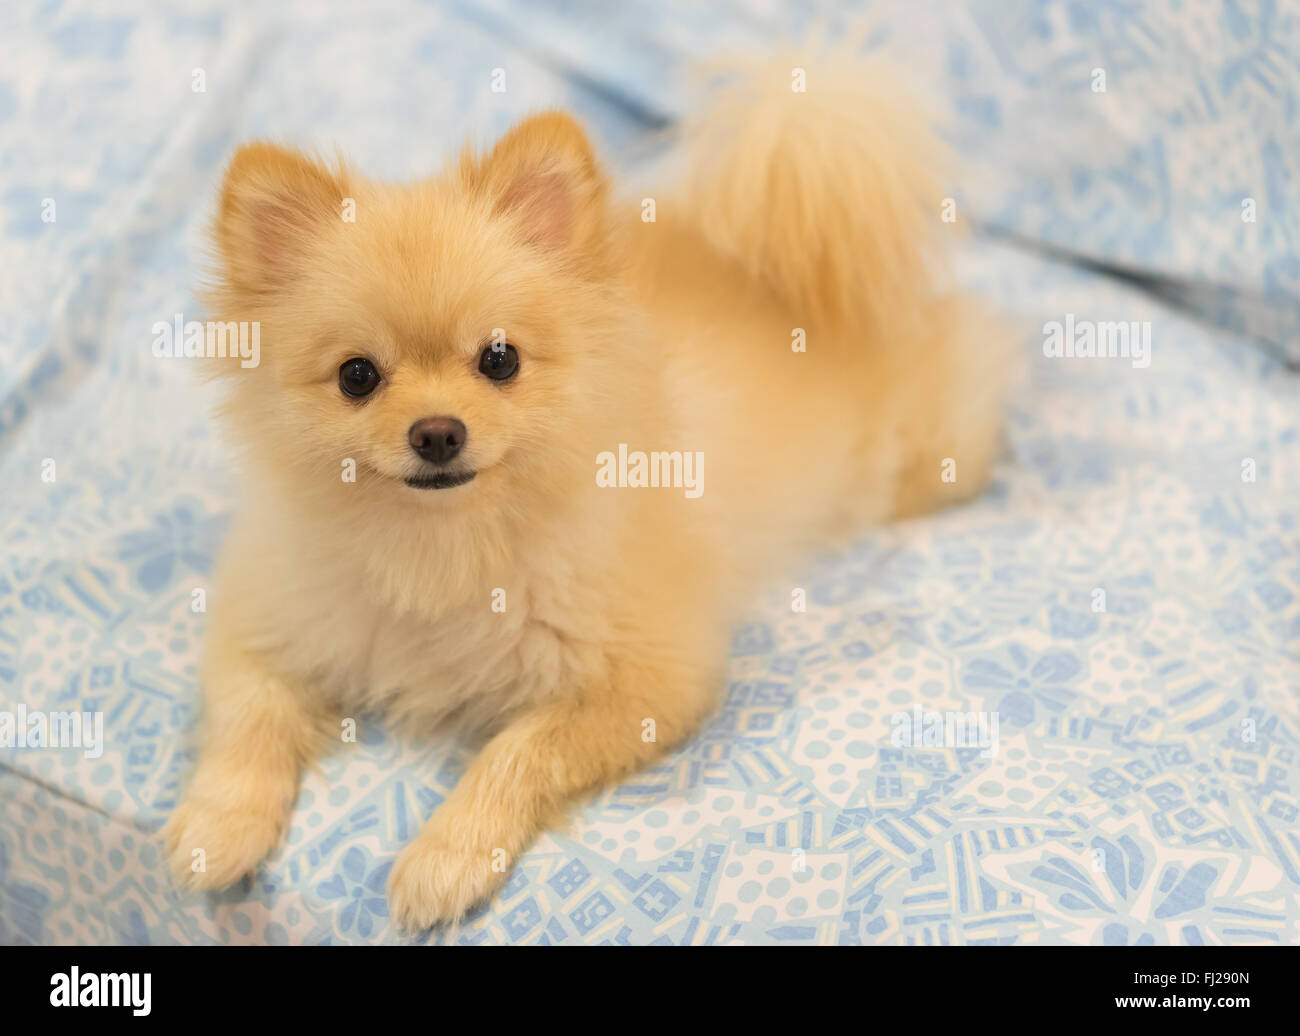 Cute pomeranian dog smiling on the sofa Stock Photo